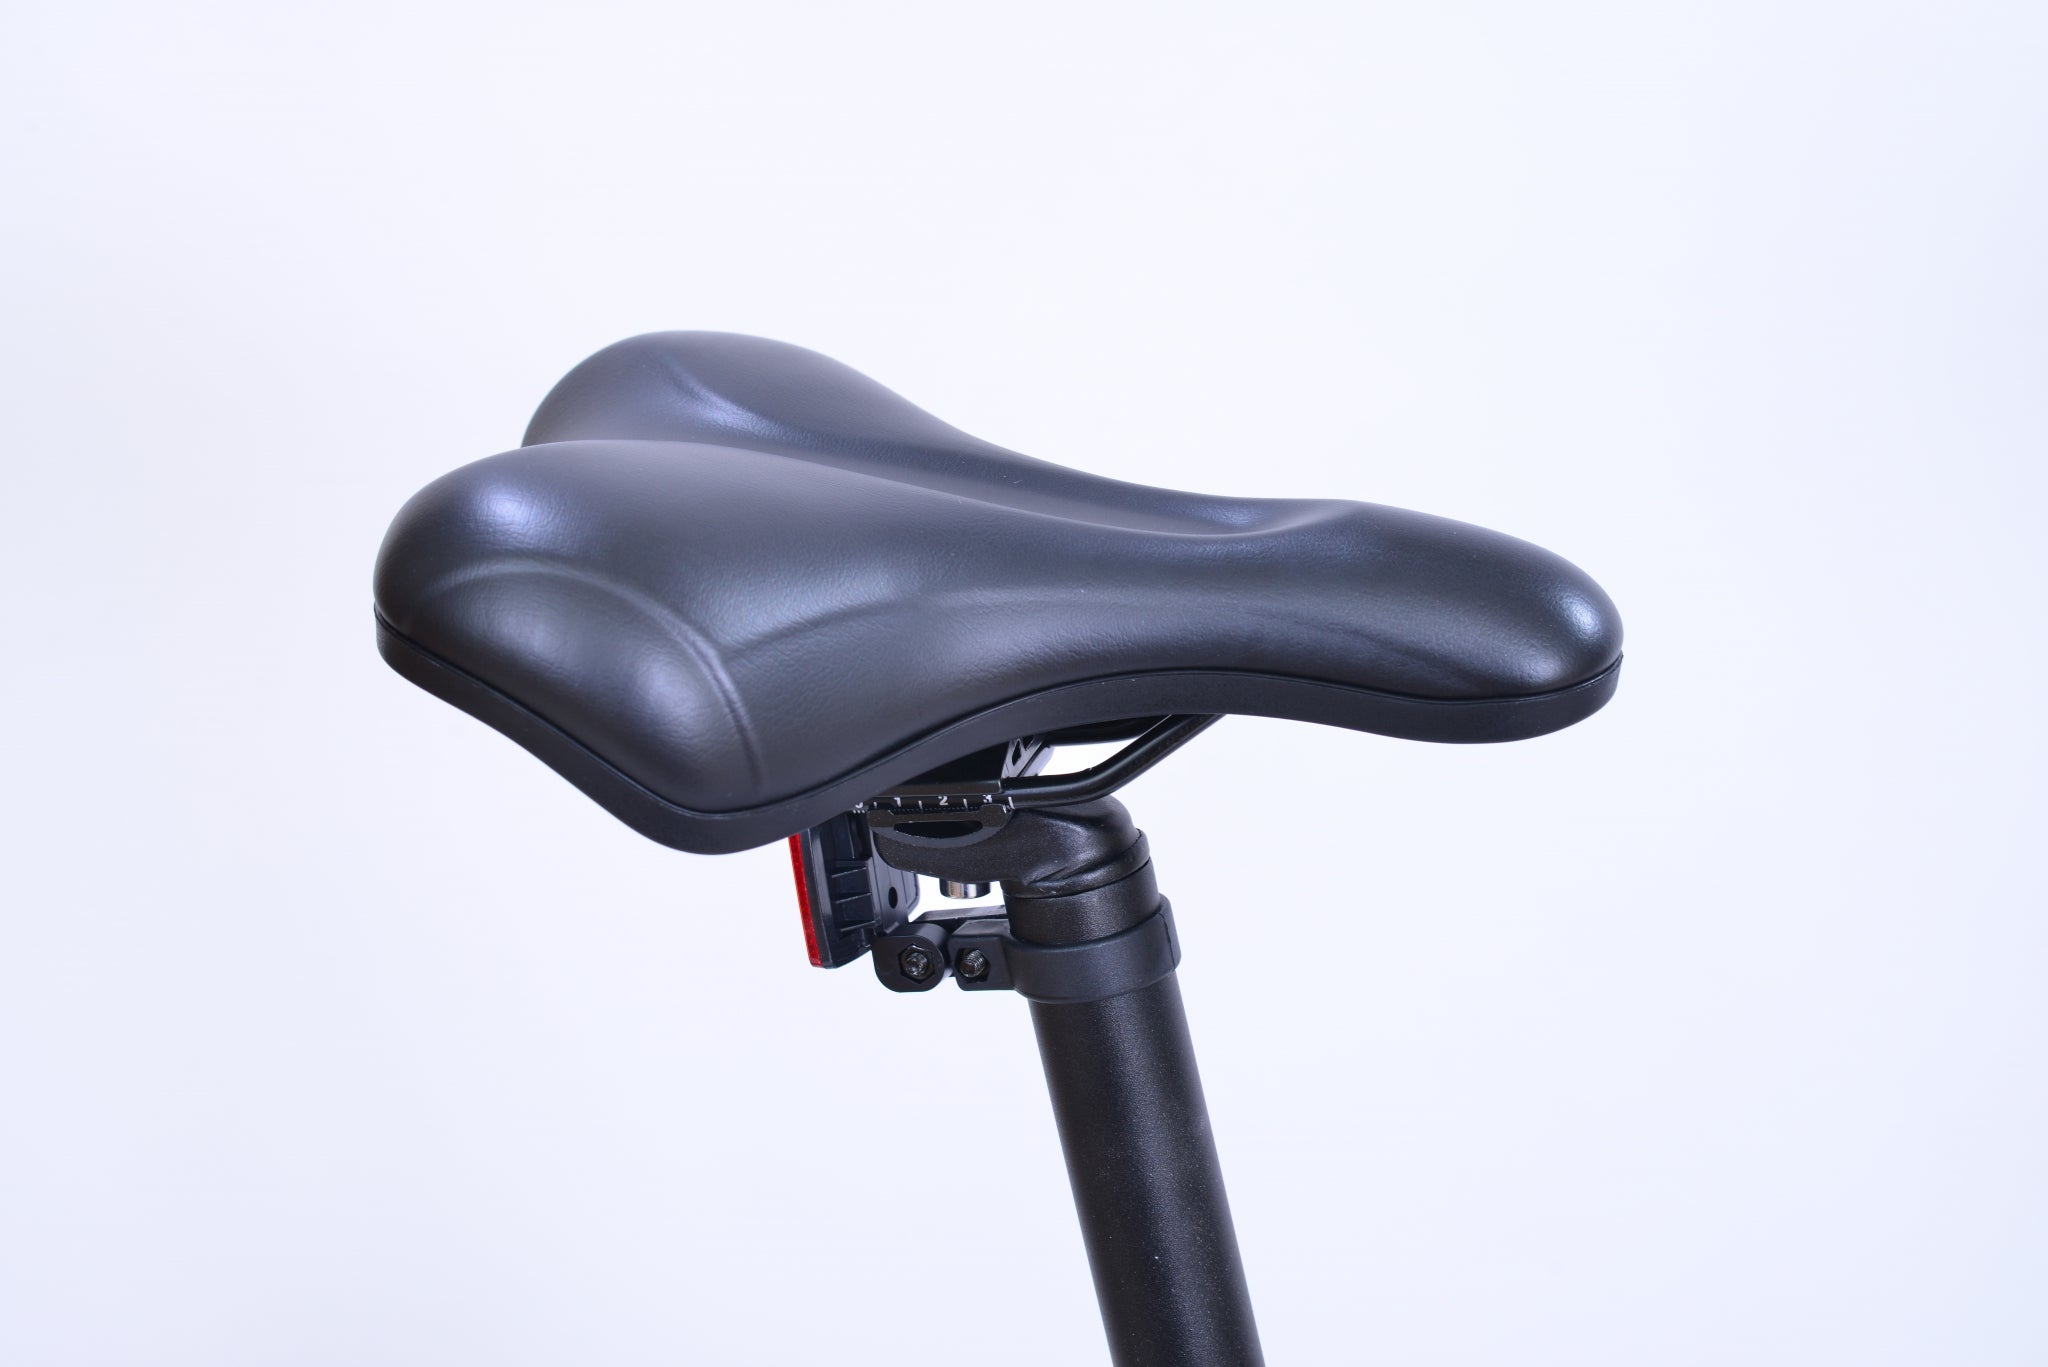 Black saddle for a bike.